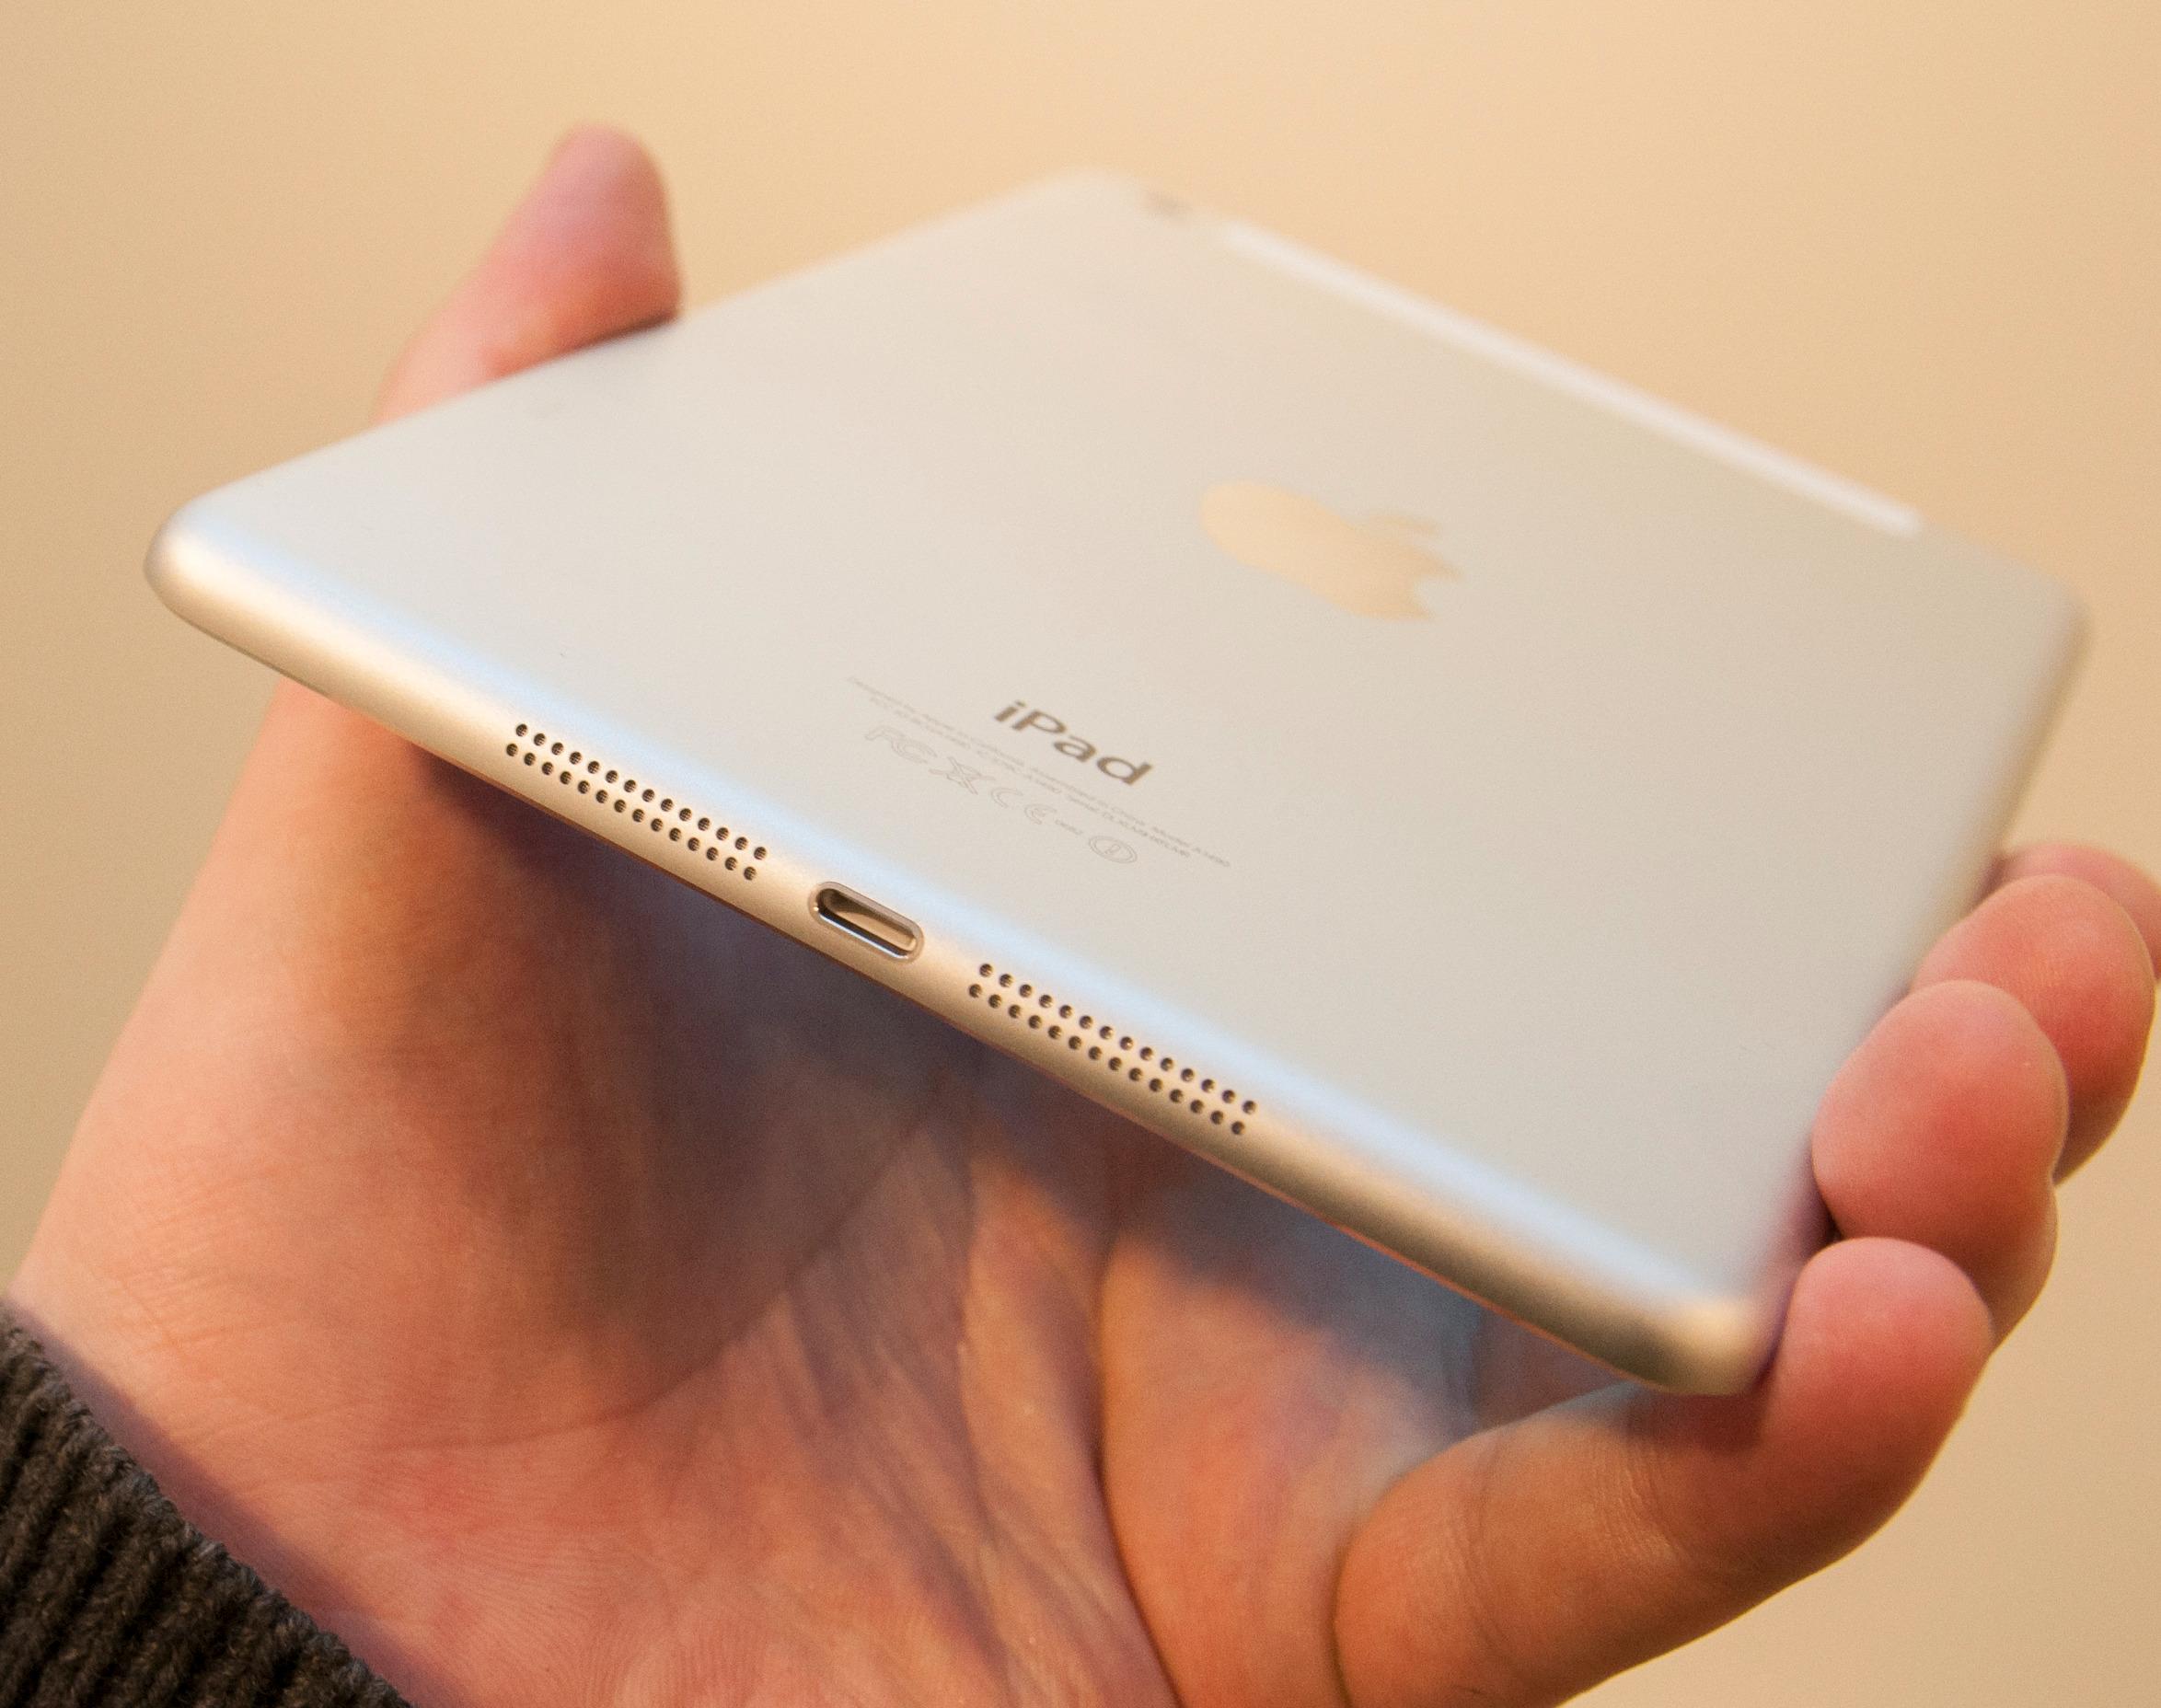 Slik ser Apples iPad Mini ut fra bunnen.Foto: Finn Jarle Kvalheim, Tek.no